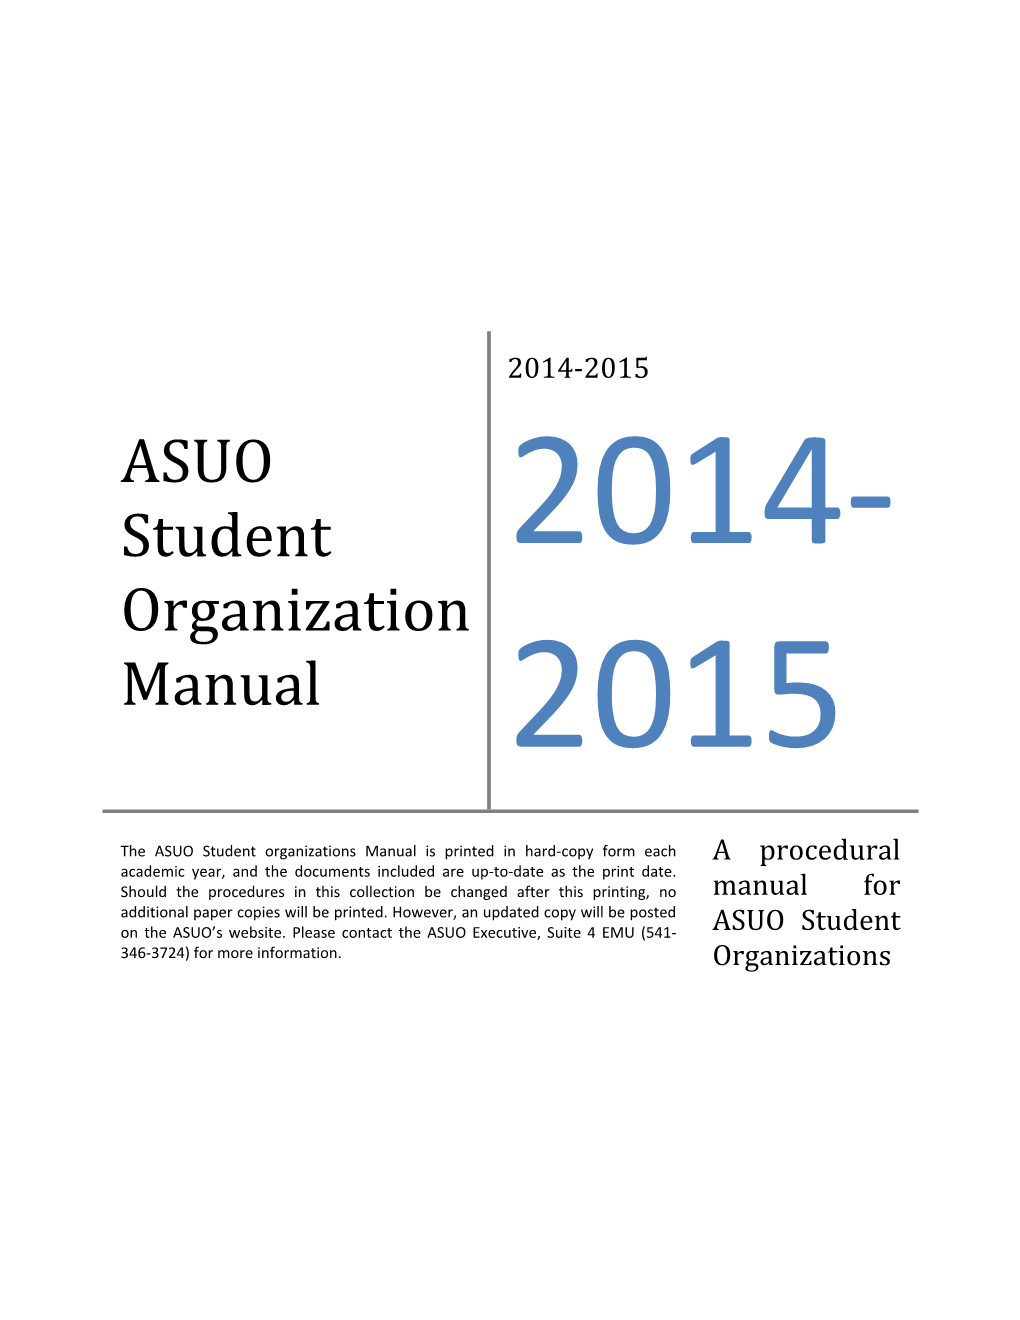 ASUO Student Organization Manual